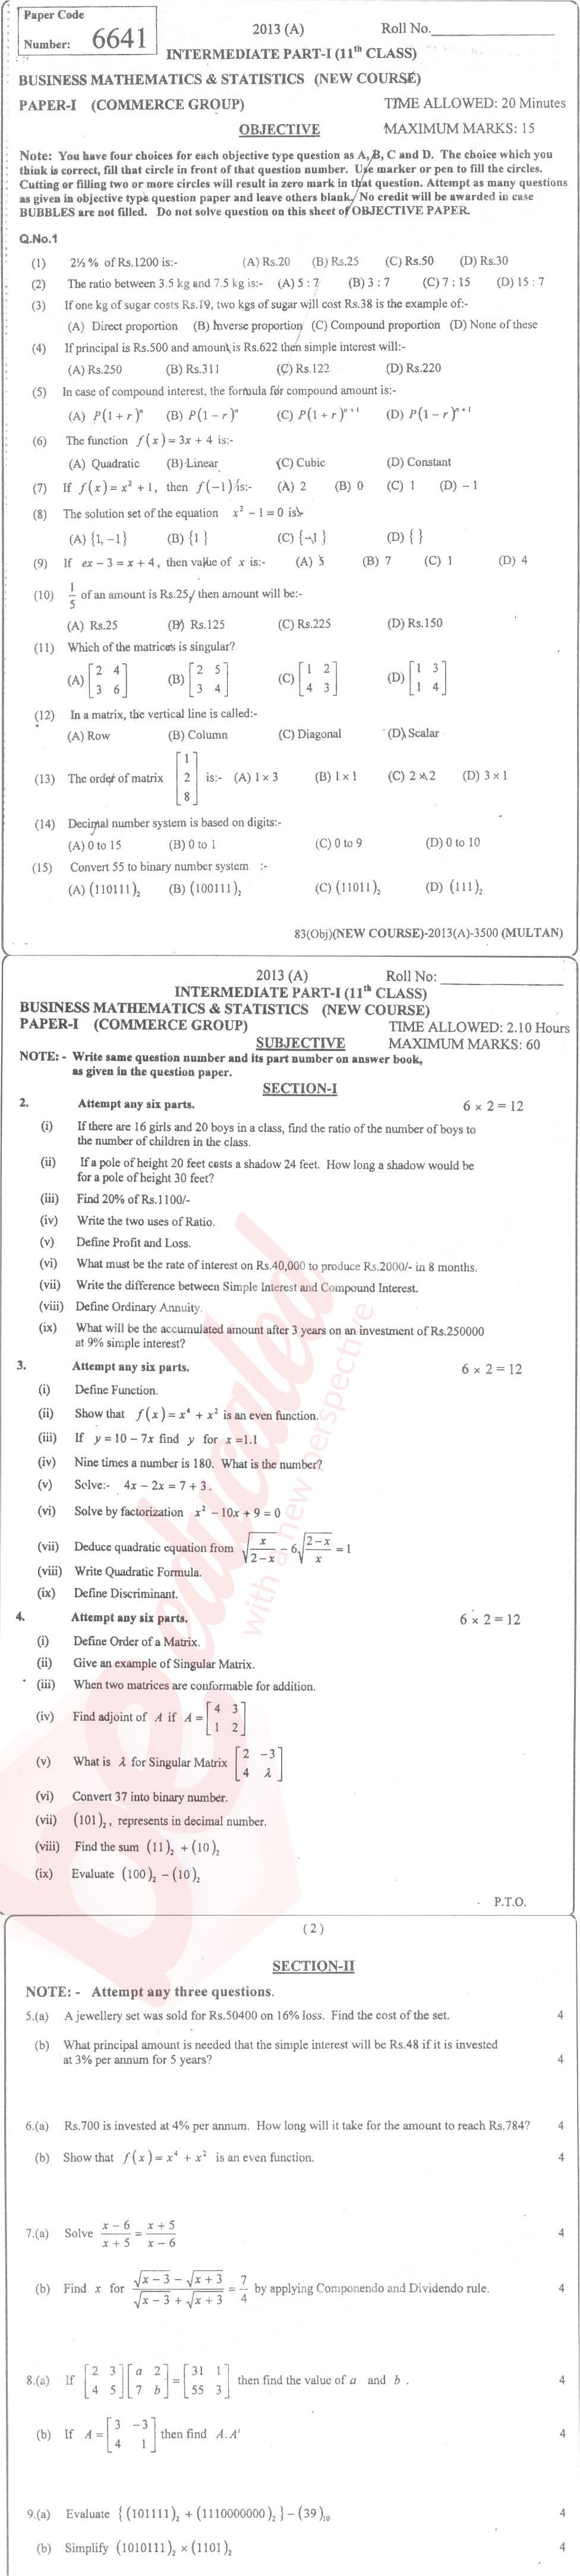 Business Mathematics ICOM Part 1 Past Paper Group 1 BISE Multan 2013